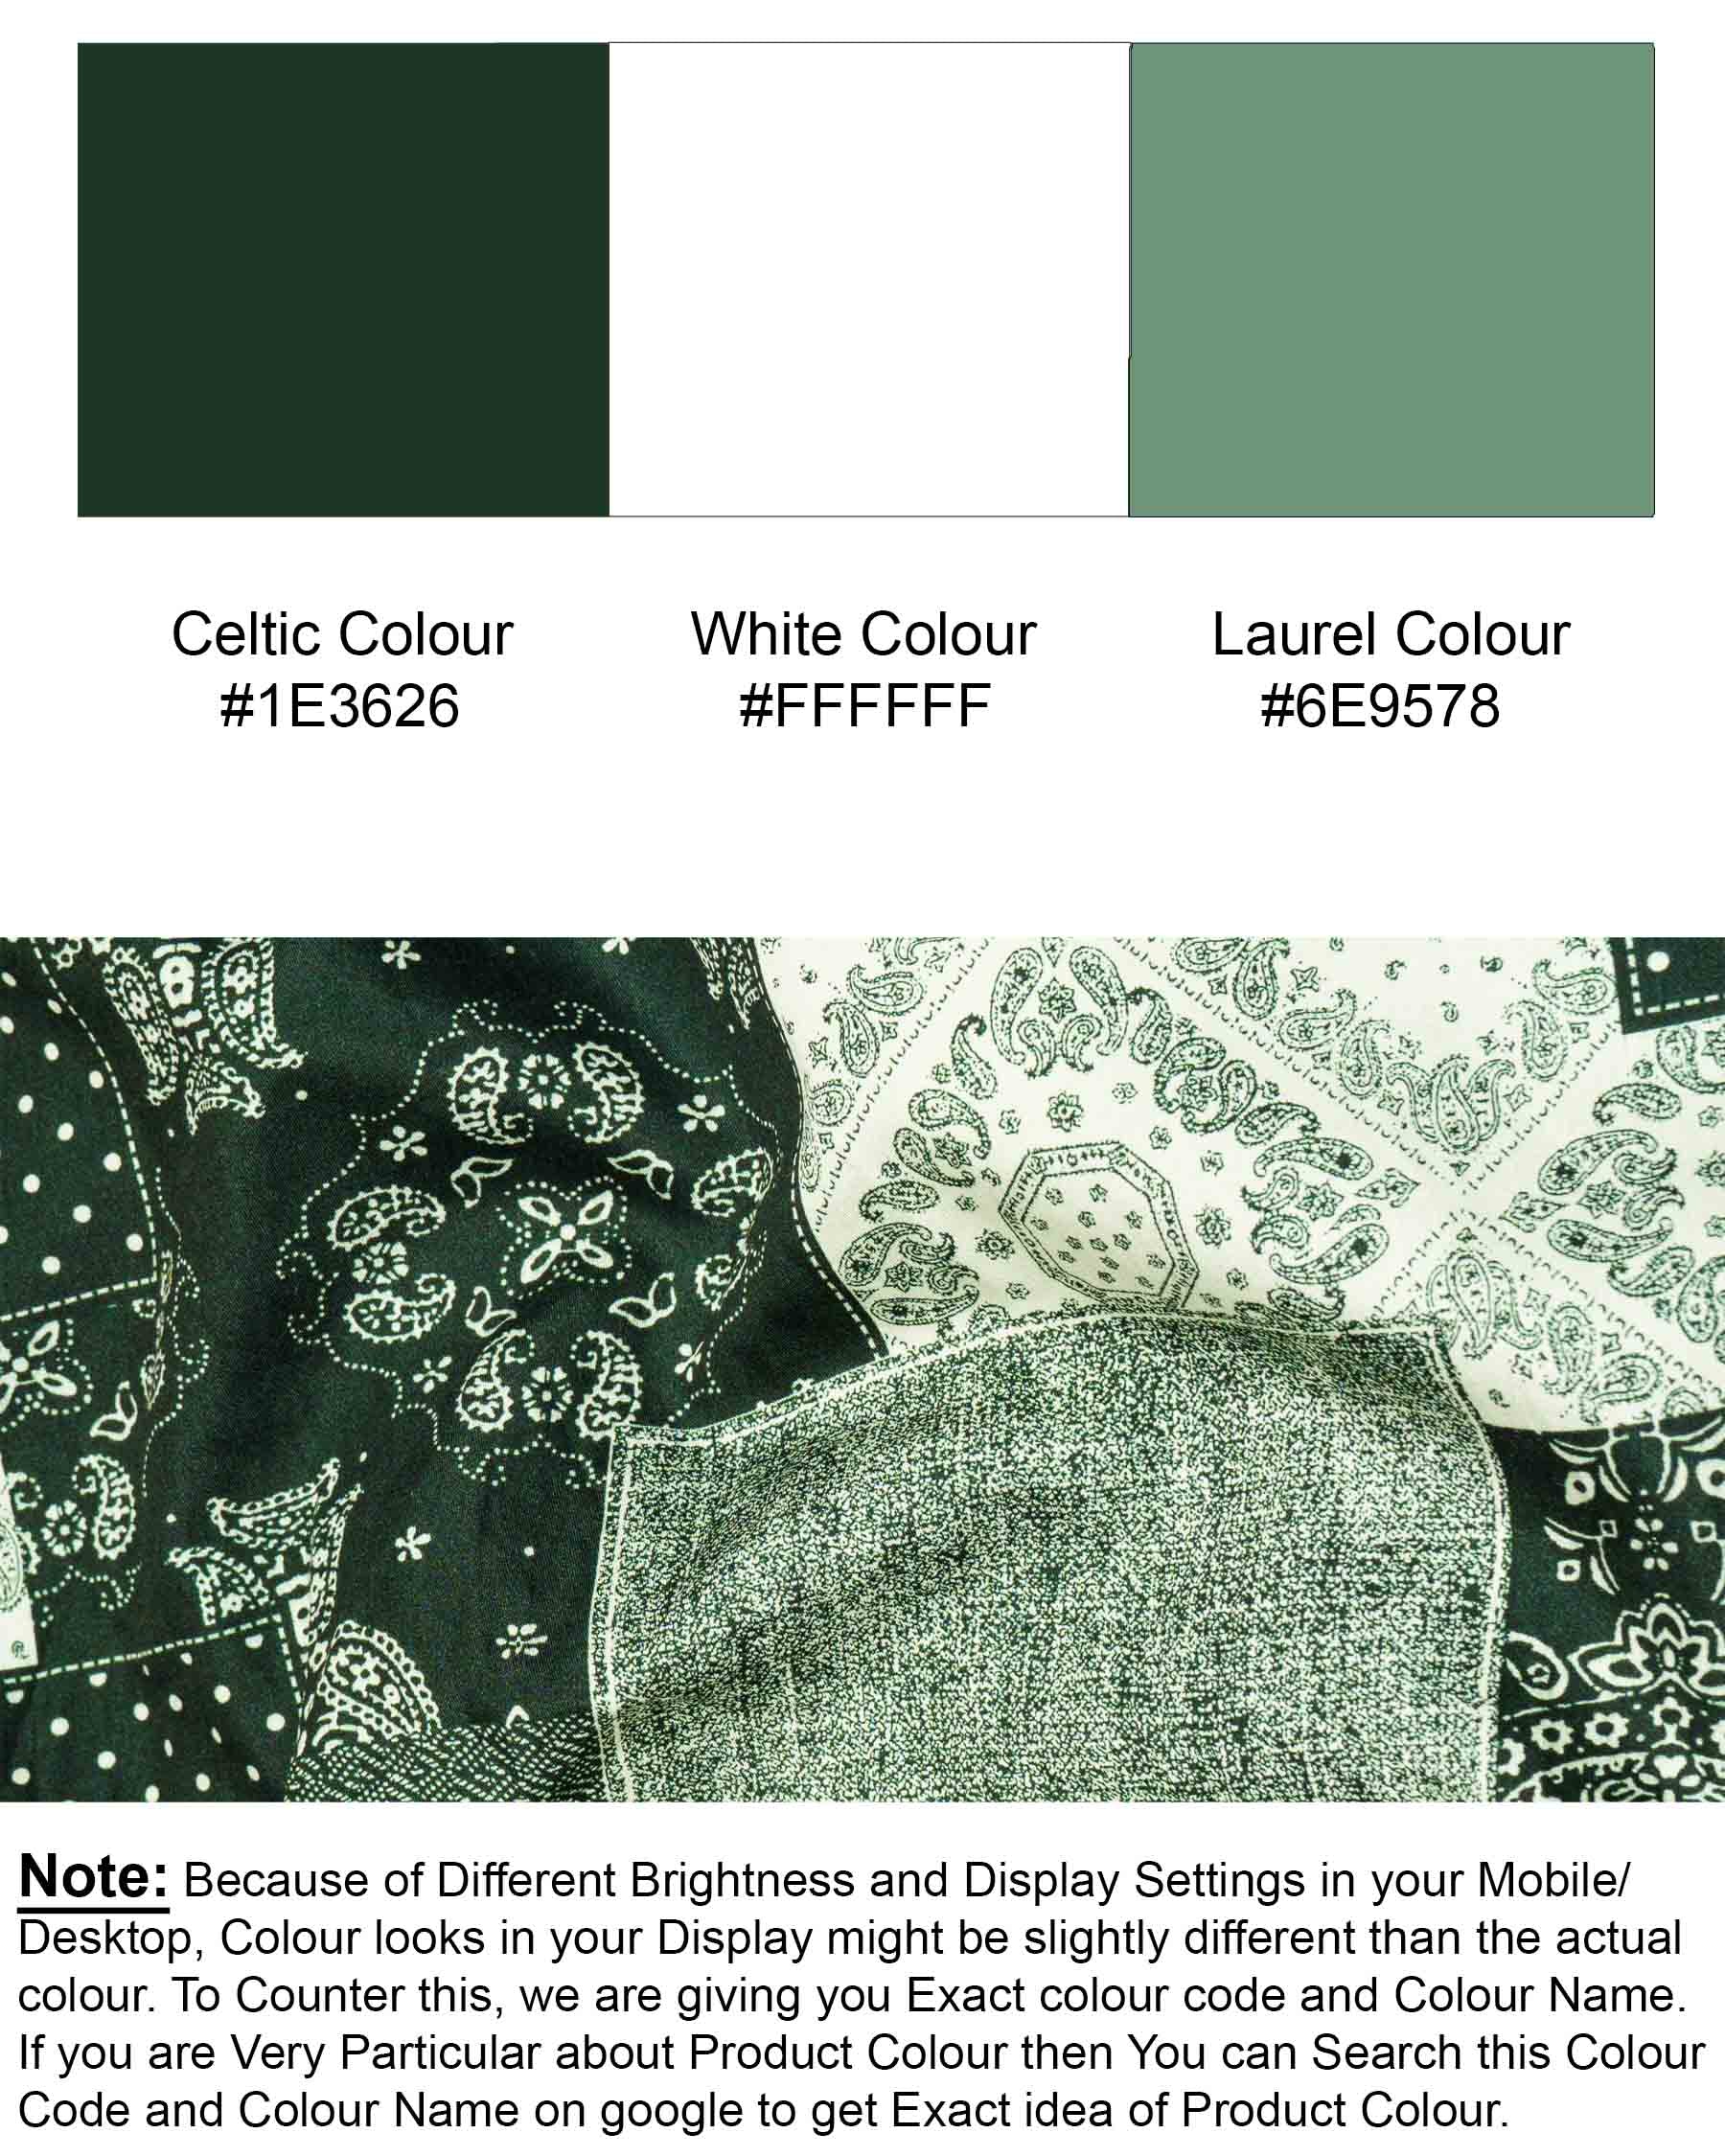 Celtic Green Quirky Printed Super Soft Premium Cotton Kurta Shirt  6546-KS-38, 6546-KS-H-38, 6546-KS-39, 6546-KS-H-39, 6546-KS-40, 6546-KS-H-40, 6546-KS-42, 6546-KS-H-42, 6546-KS-44, 6546-KS-H-44, 6546-KS-46, 6546-KS-H-46, 6546-KS-48, 6546-KS-H-48, 6546-KS-50, 6546-KS-H-50, 6546-KS-52, 6546-KS-H-52